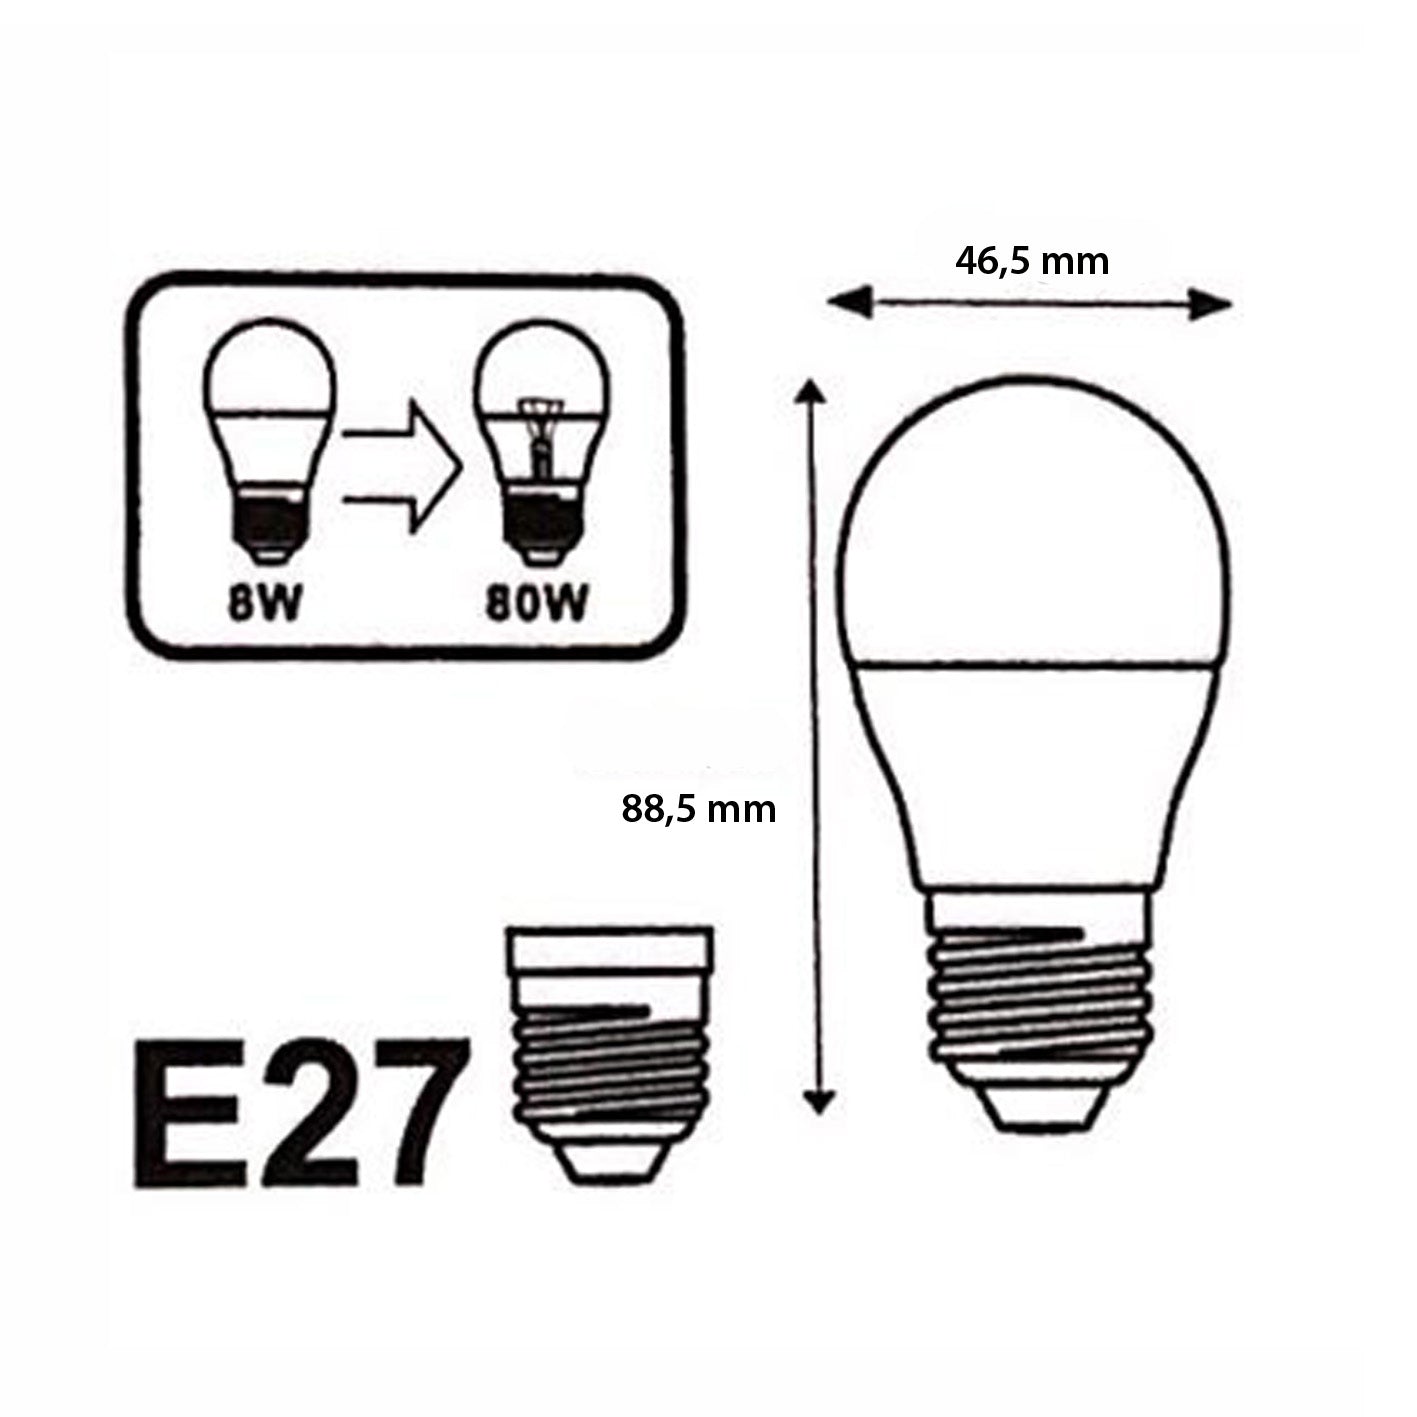 Ampoule LED E27 8W 220V G45 300°